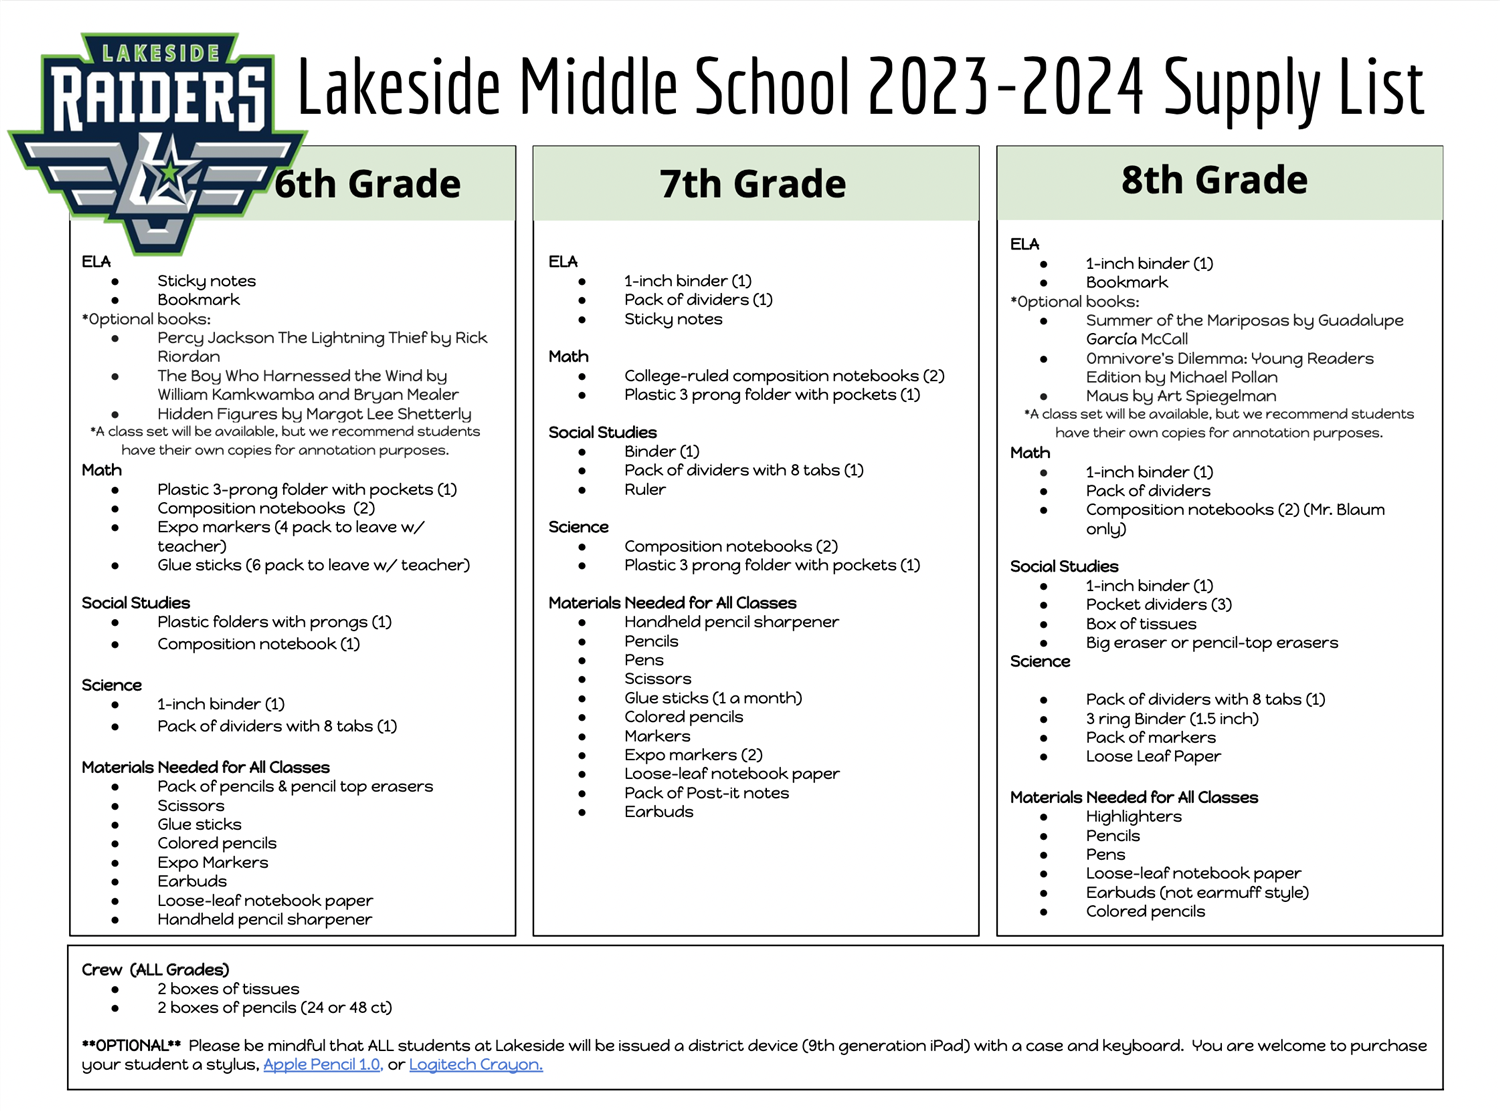  Lakeside Supplies List (2023-24)